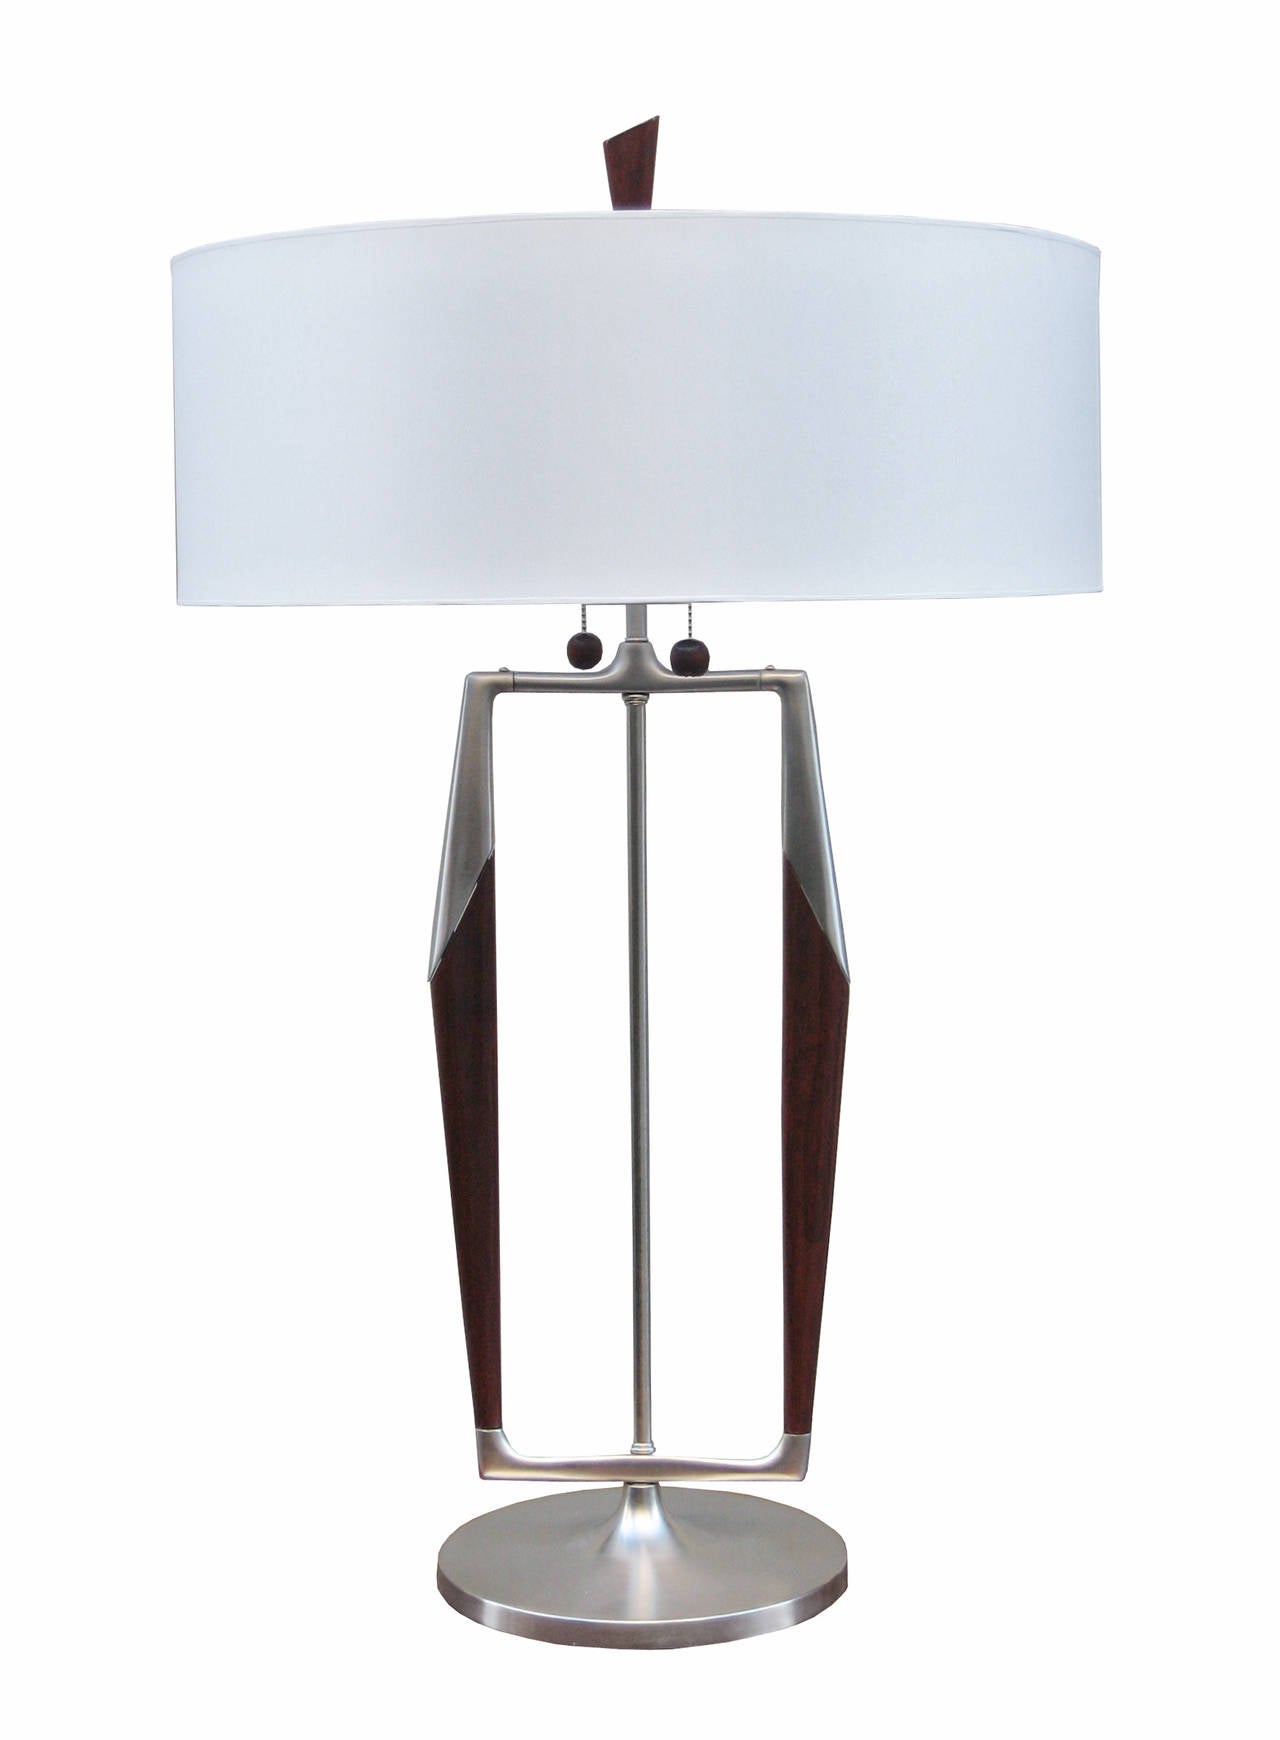 A Gerald Thurston designed modernist table lamp.